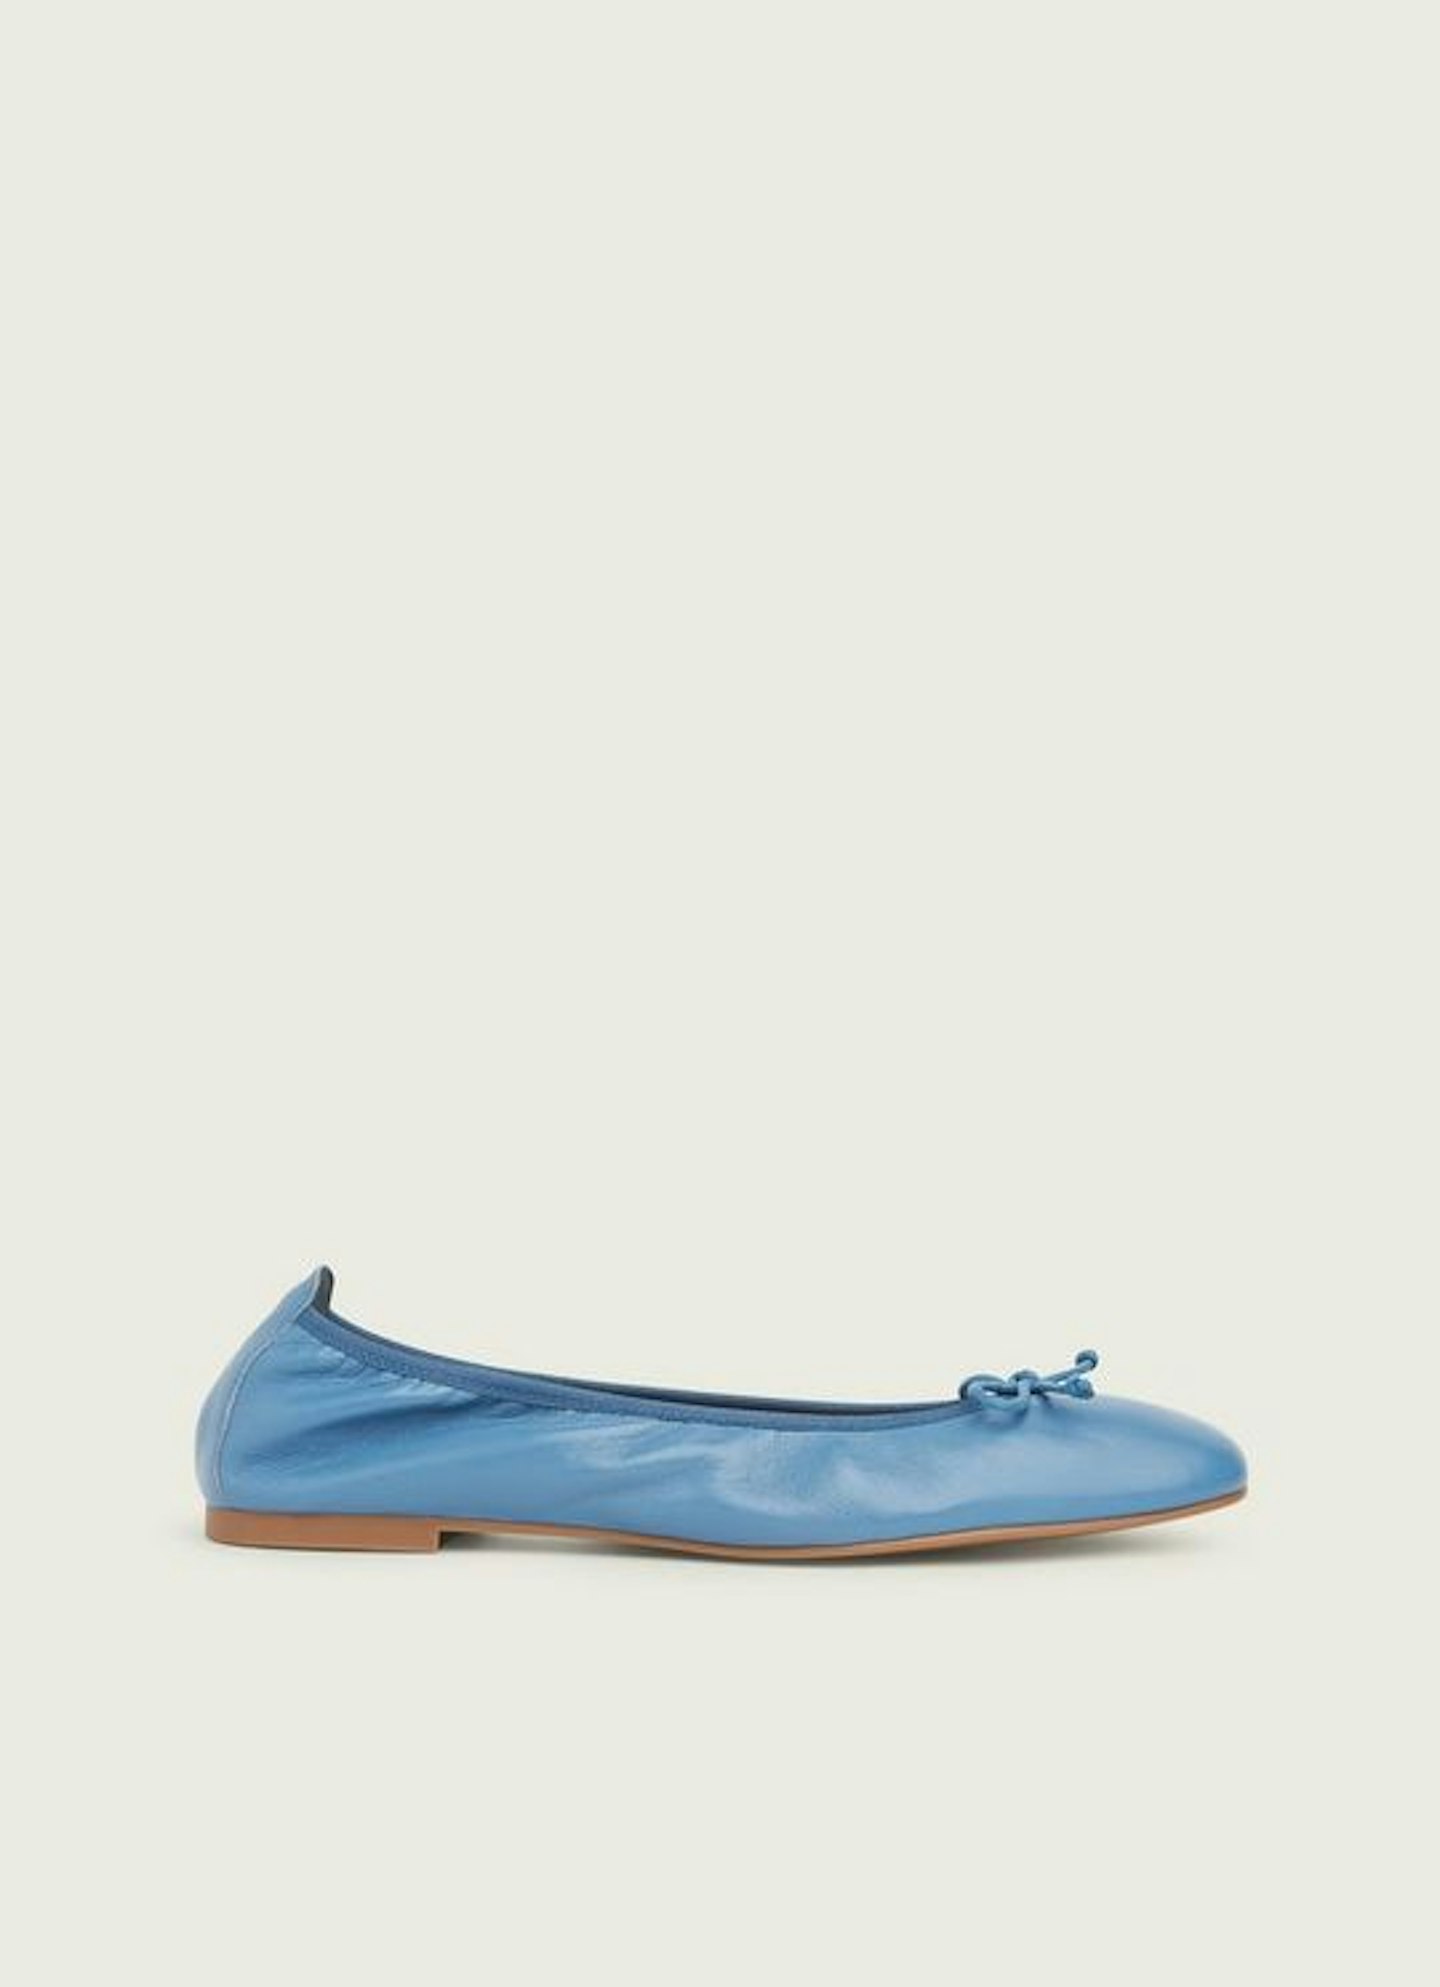 LK Bennett, Trilly Blue Leather Ballerina Pumps, £76